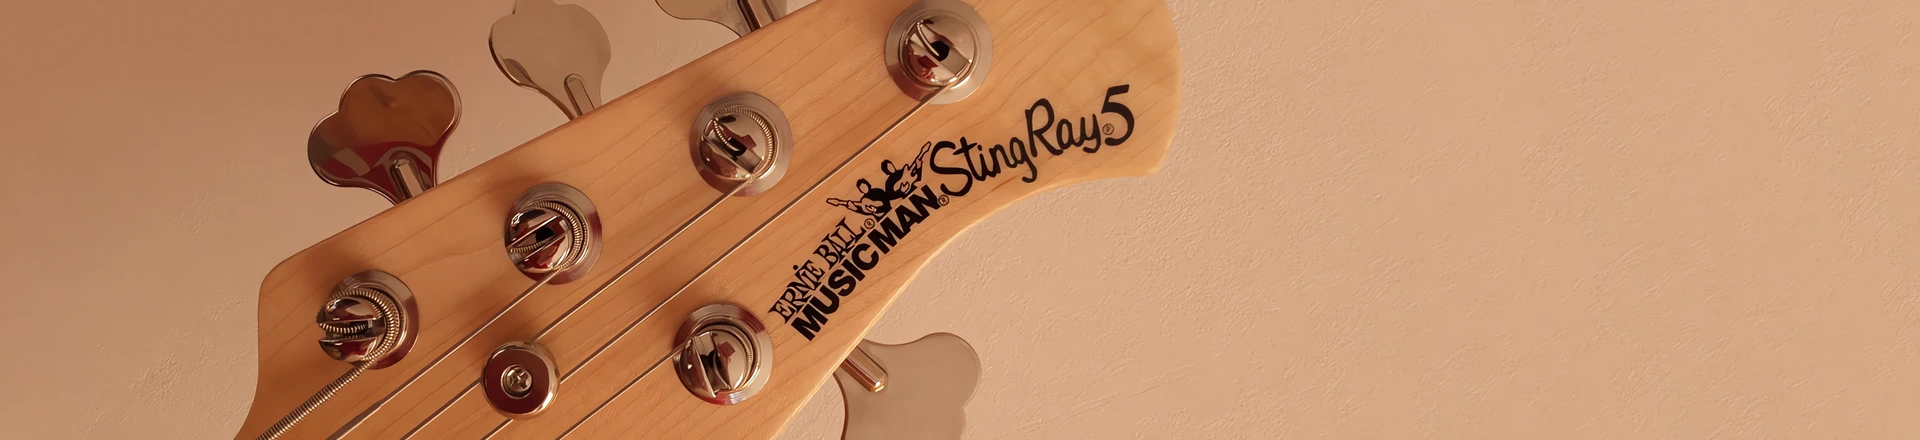 Test gitary basowej Music Man StingRay 5 w Infogitara.pl